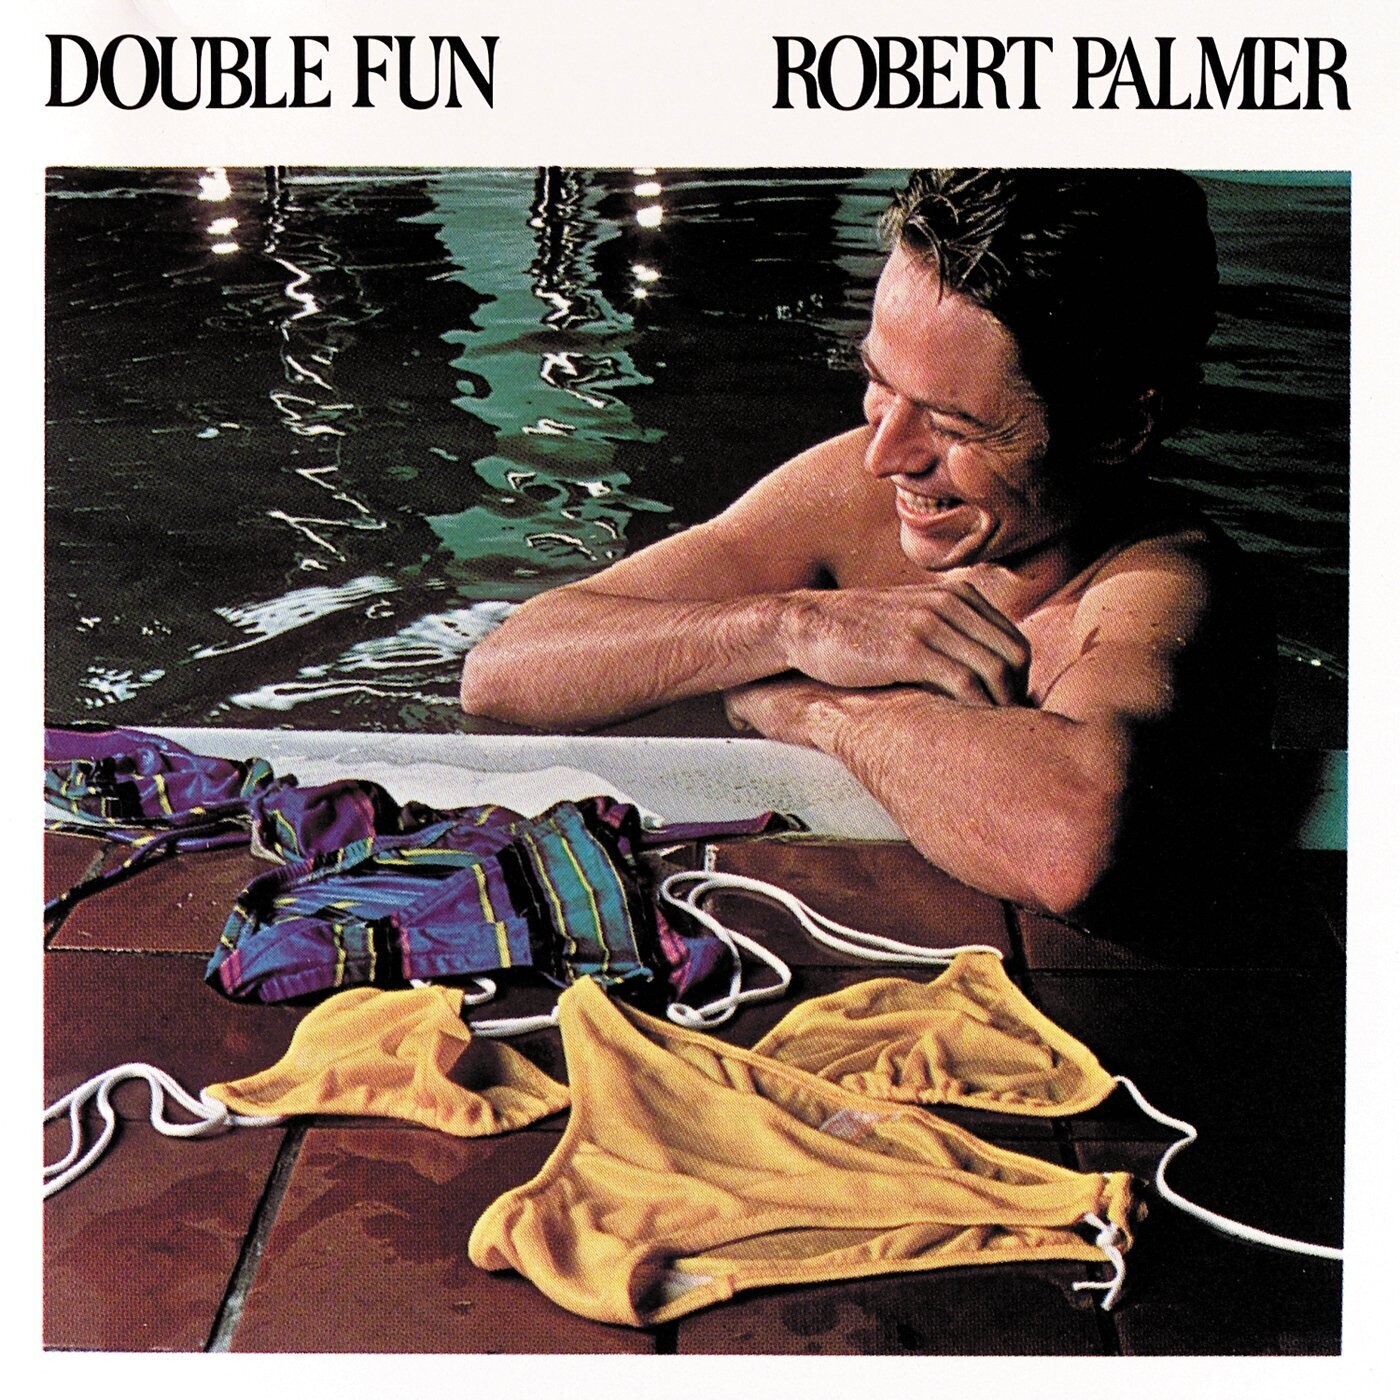 Robert Palmer "Double Fun" EX+ 1978